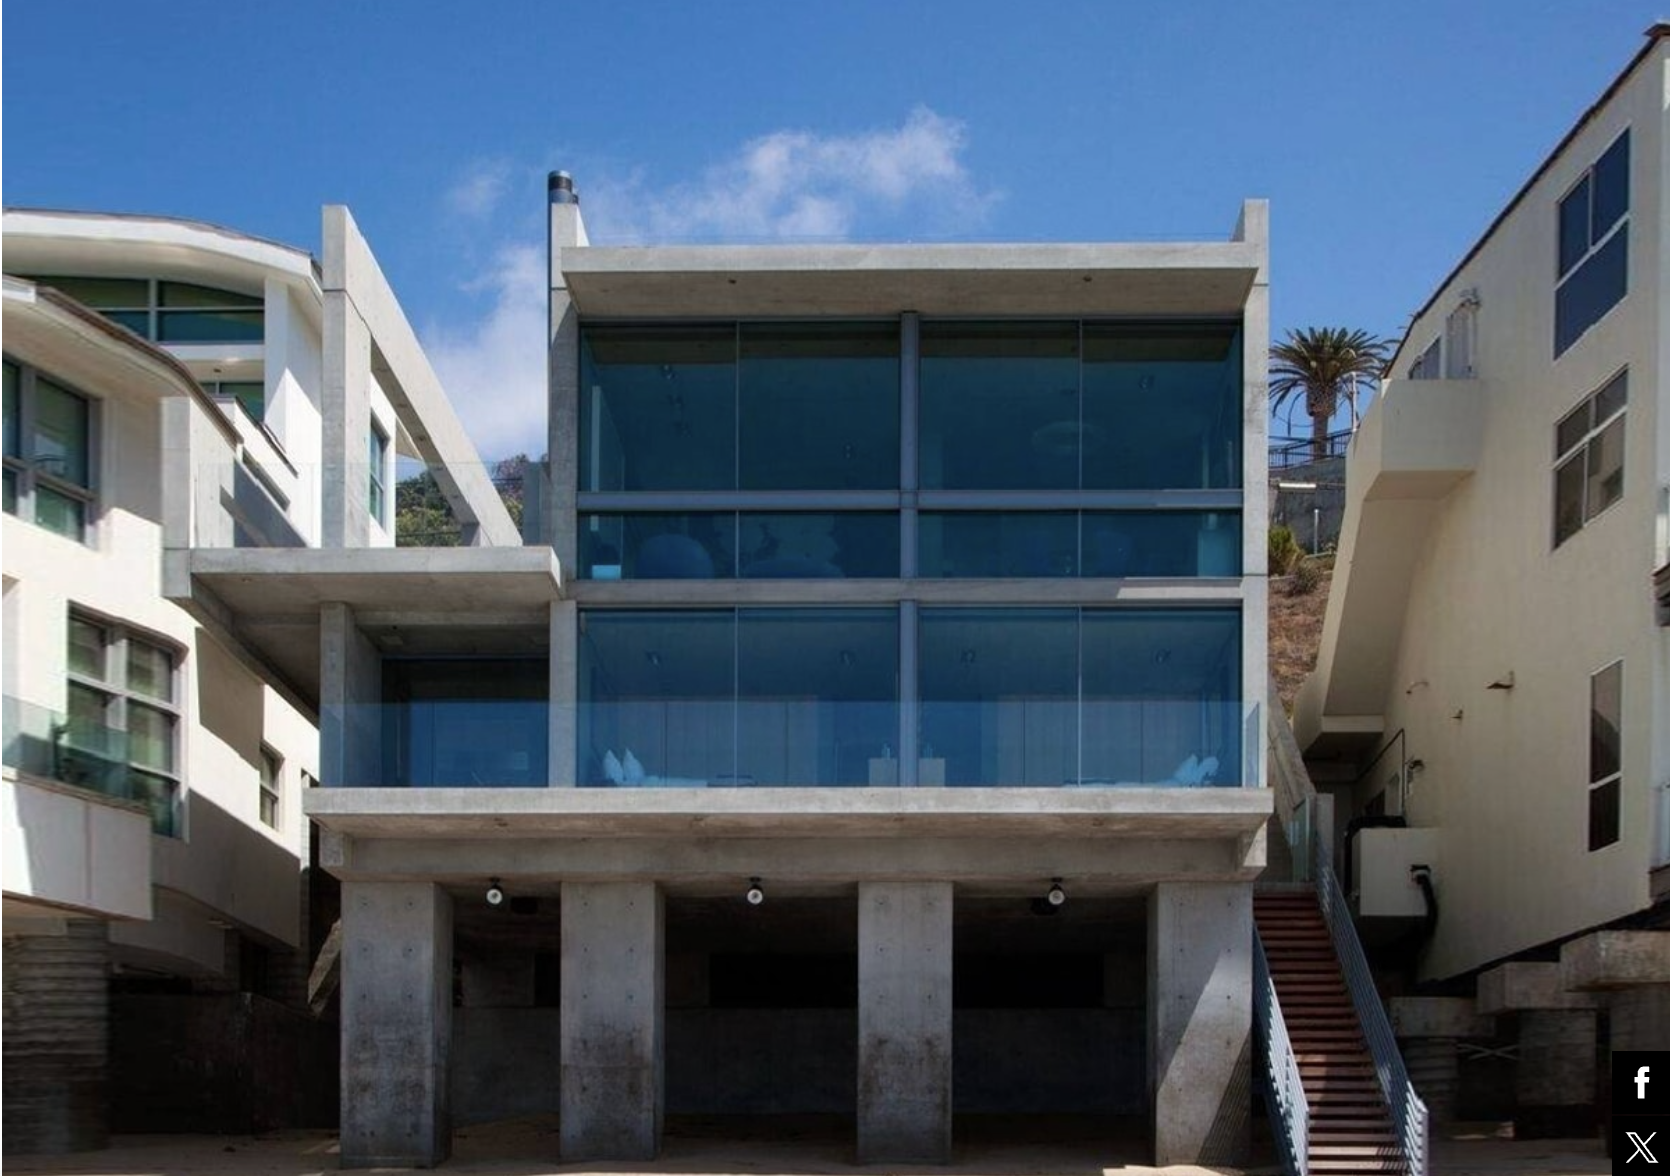 kanye-wests-malibu-architectural-masterpiece-hits-the-market-a-minimalist-marvel-by-tadao-ando